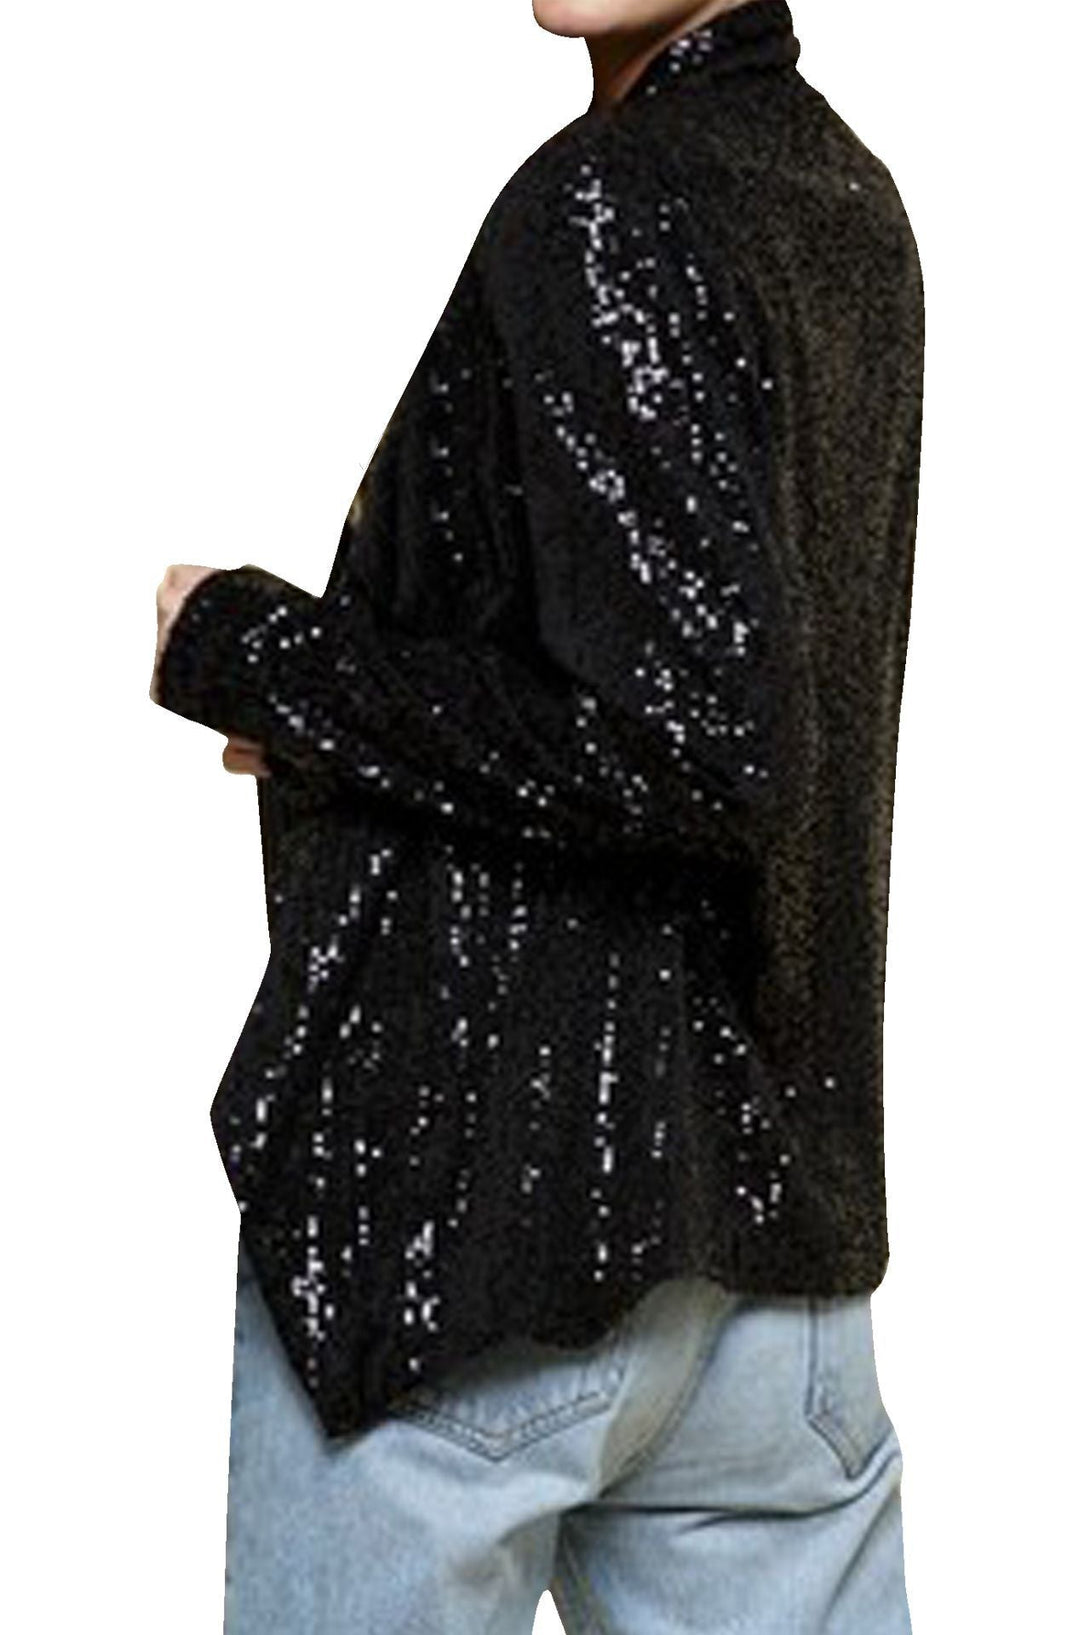 "black sequin blazer plus size" "Shahida Parides" "sequin jacket women's plus size" "plus size womens sequin jacket"